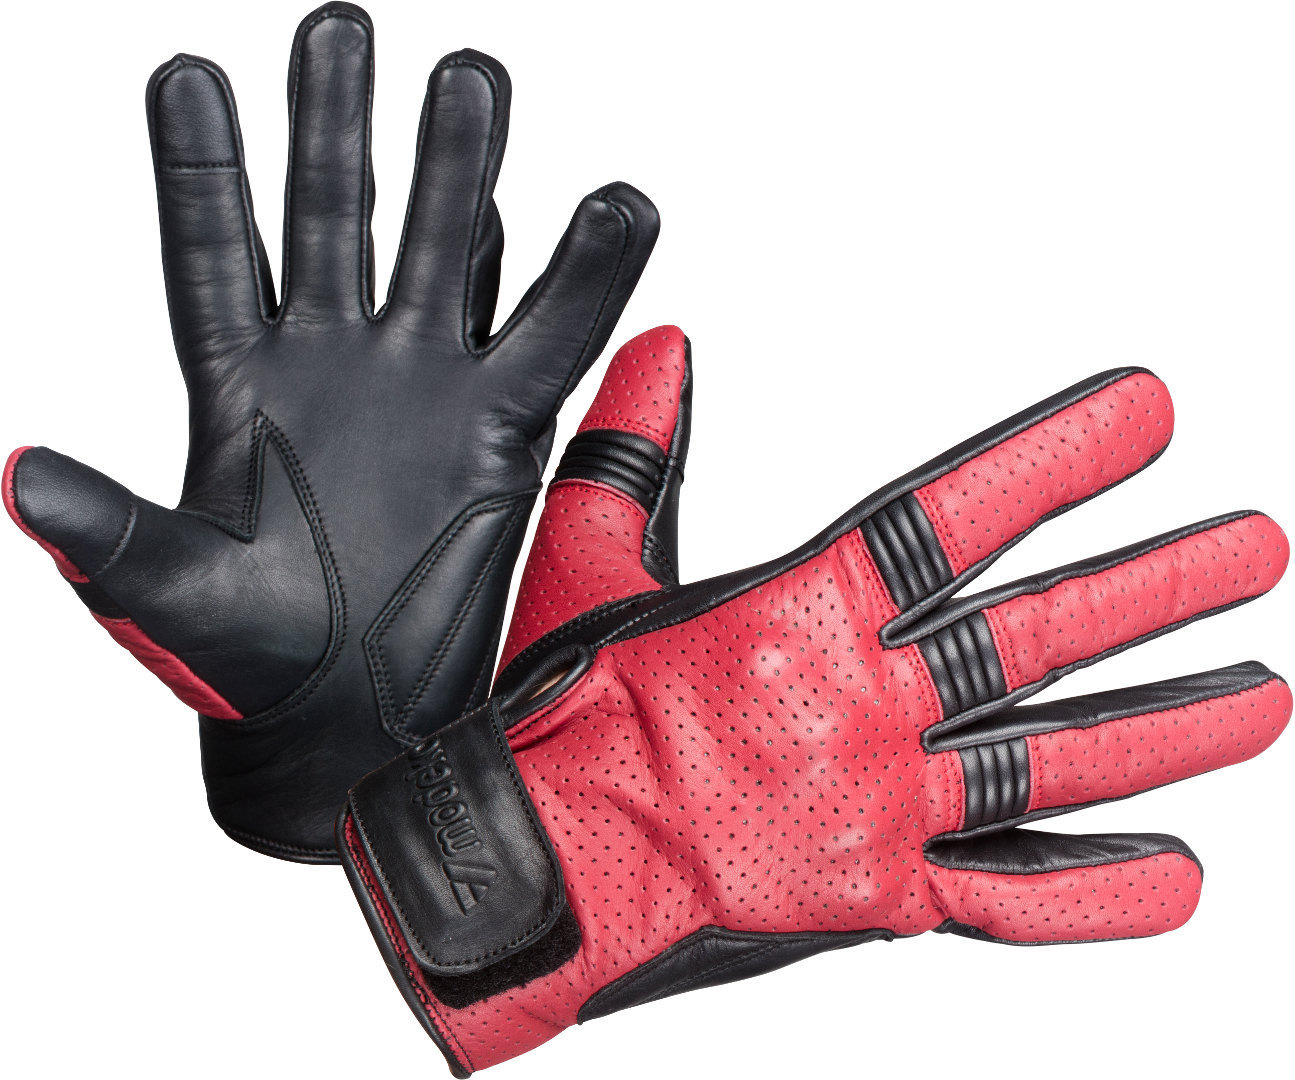 Modeka Hot Two Ladies Motorcycle Gloves, black-red, Size L for Women, black-red, Size L for Women